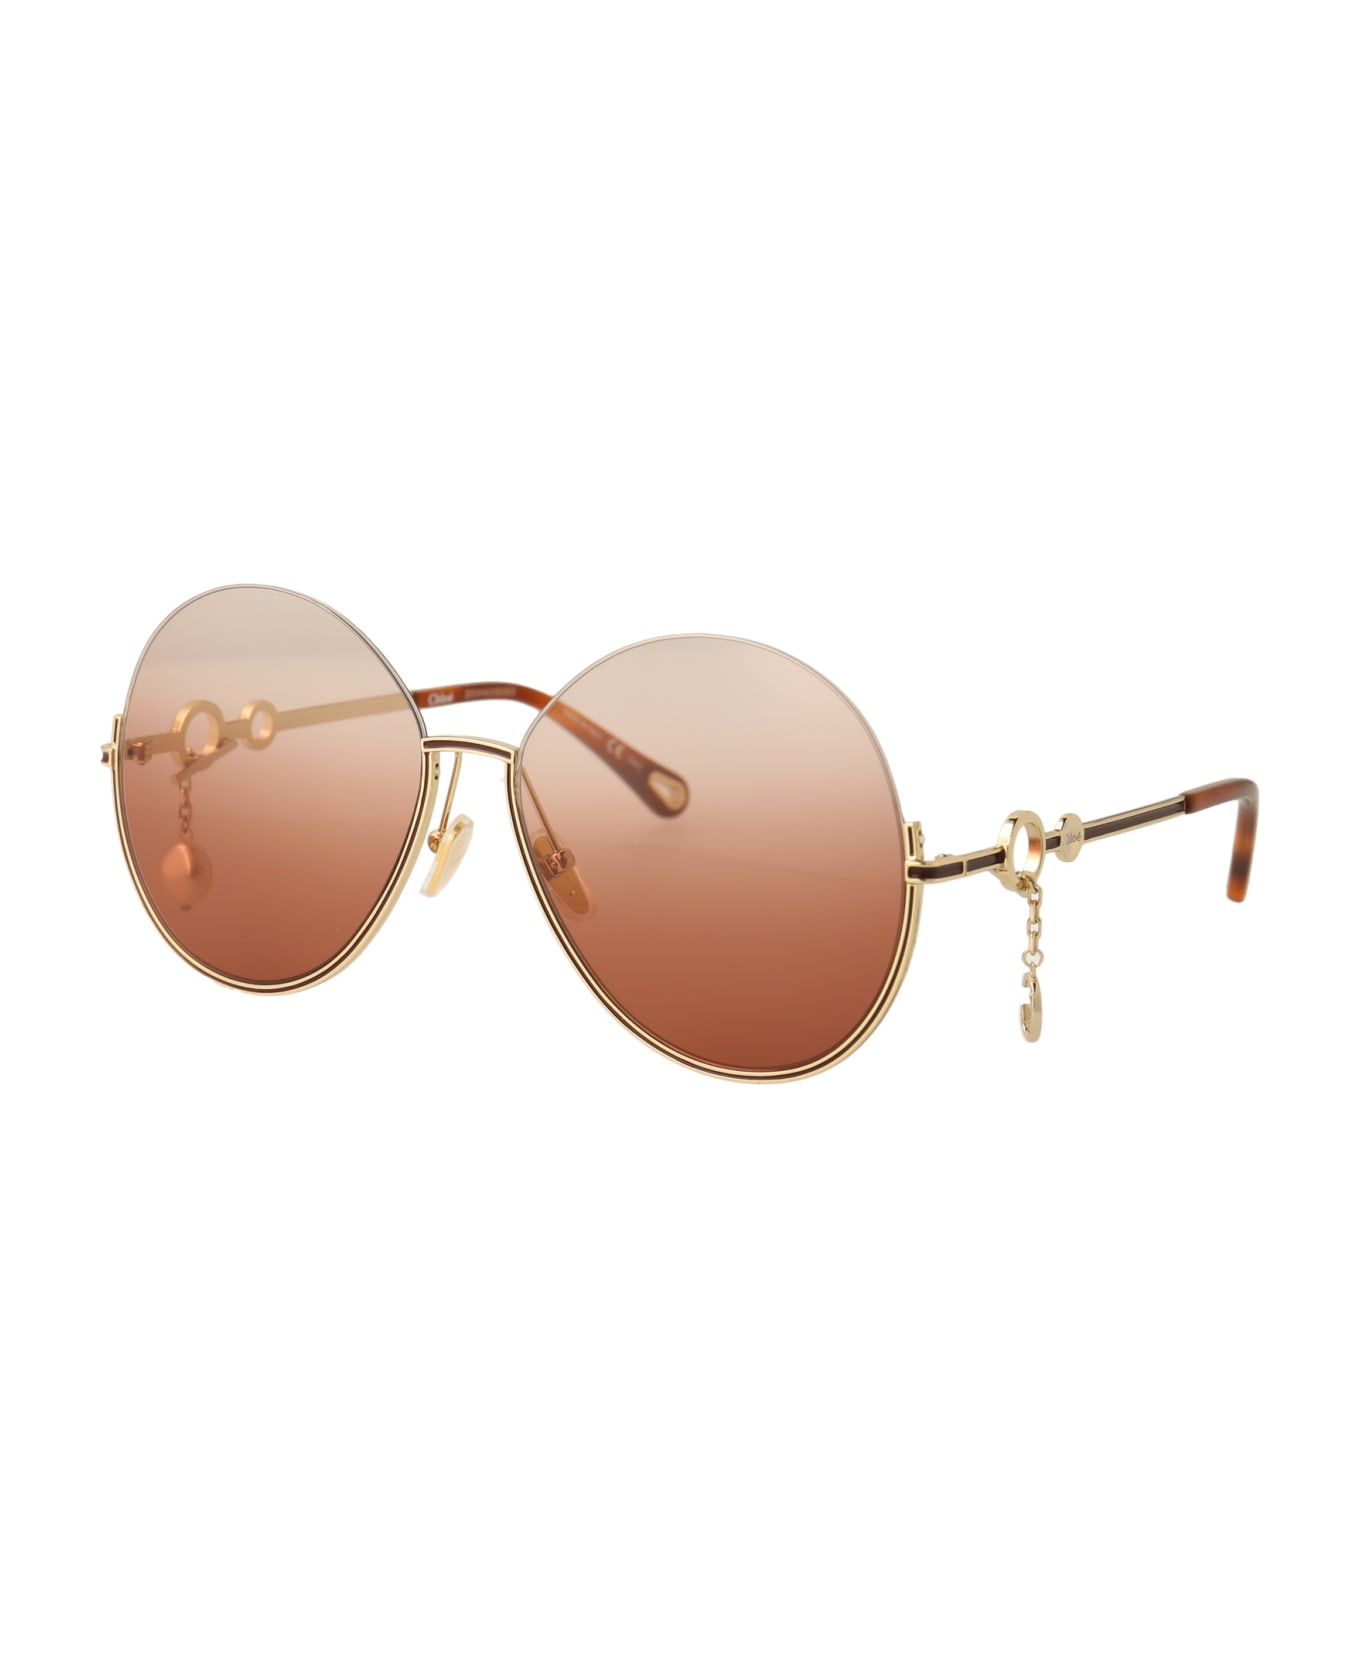 Chloé Eyewear Ch0067s Sunglasses - 002 GOLD GOLD ORANGE